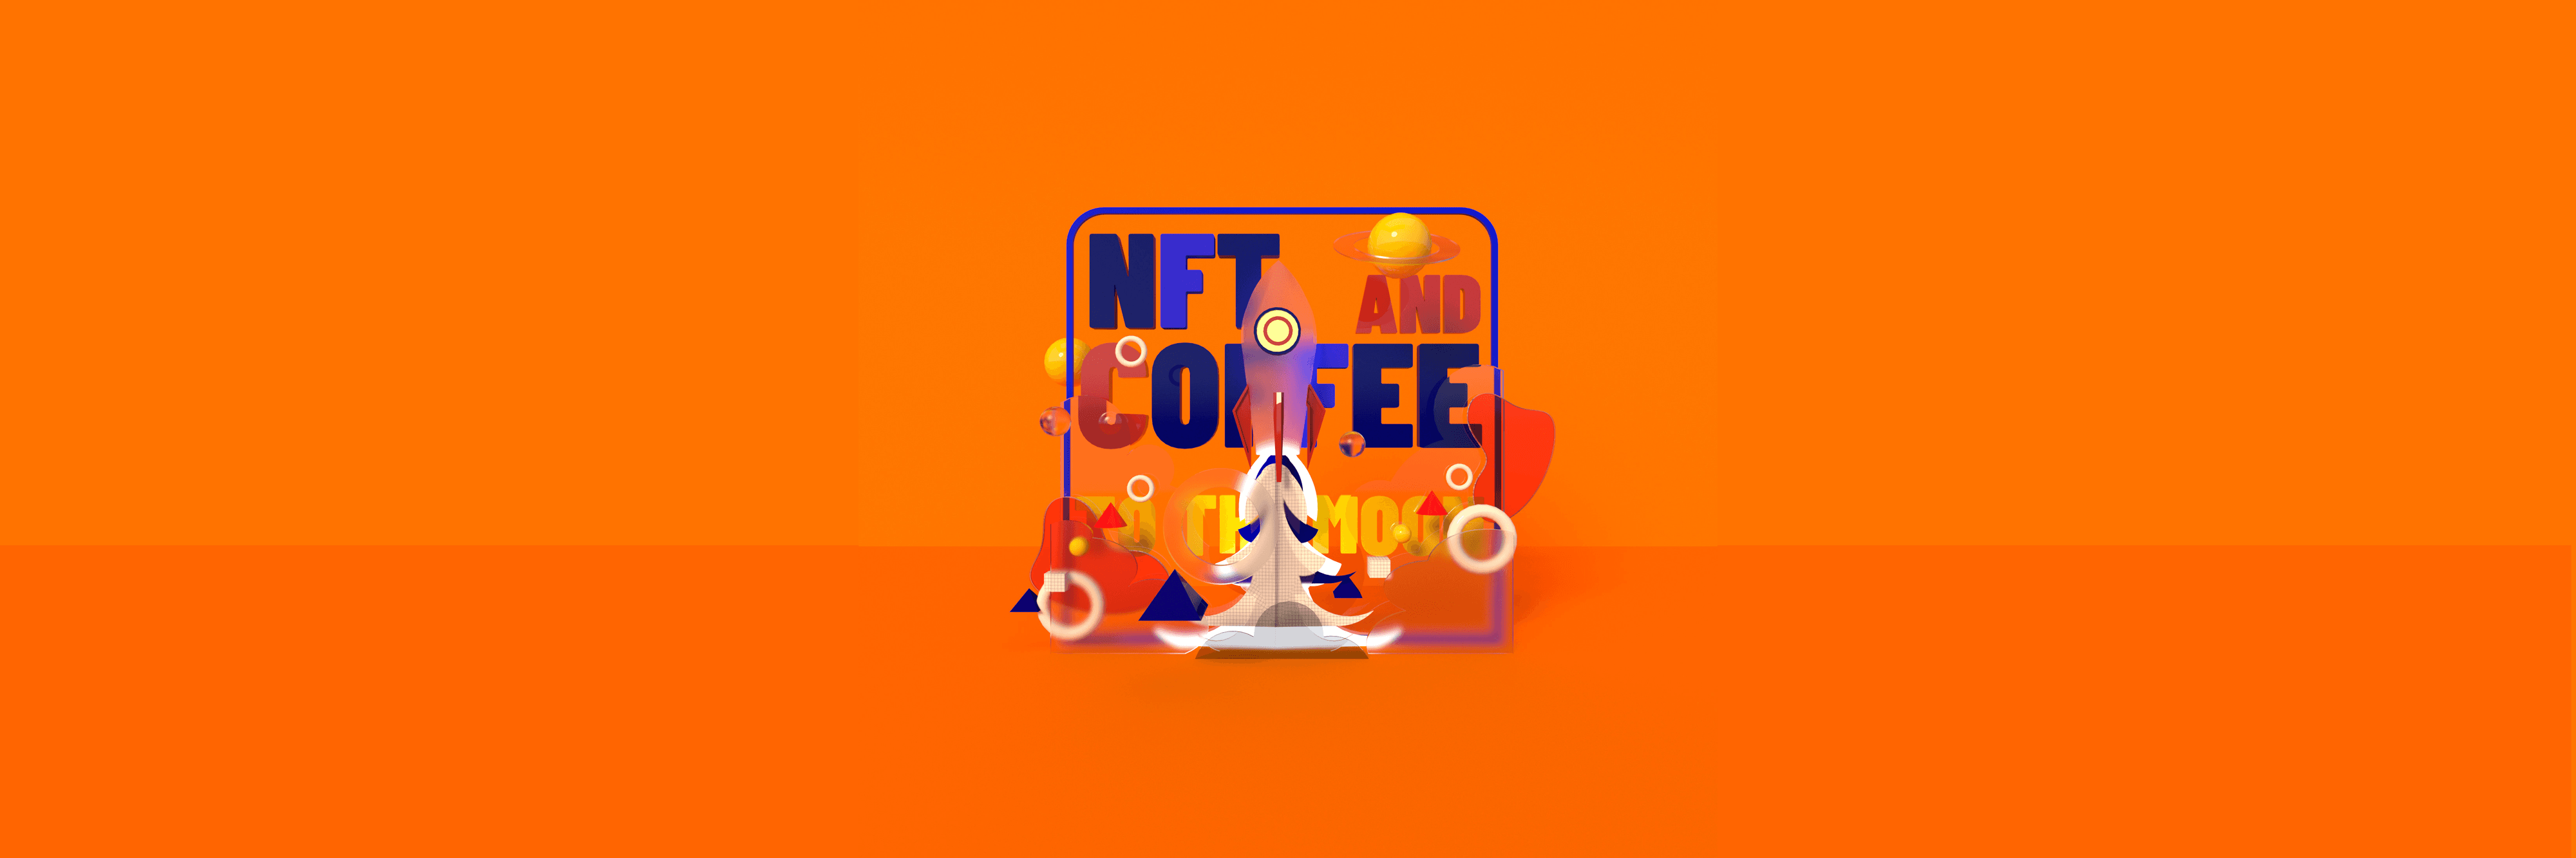 nft_and_coffee 橫幅